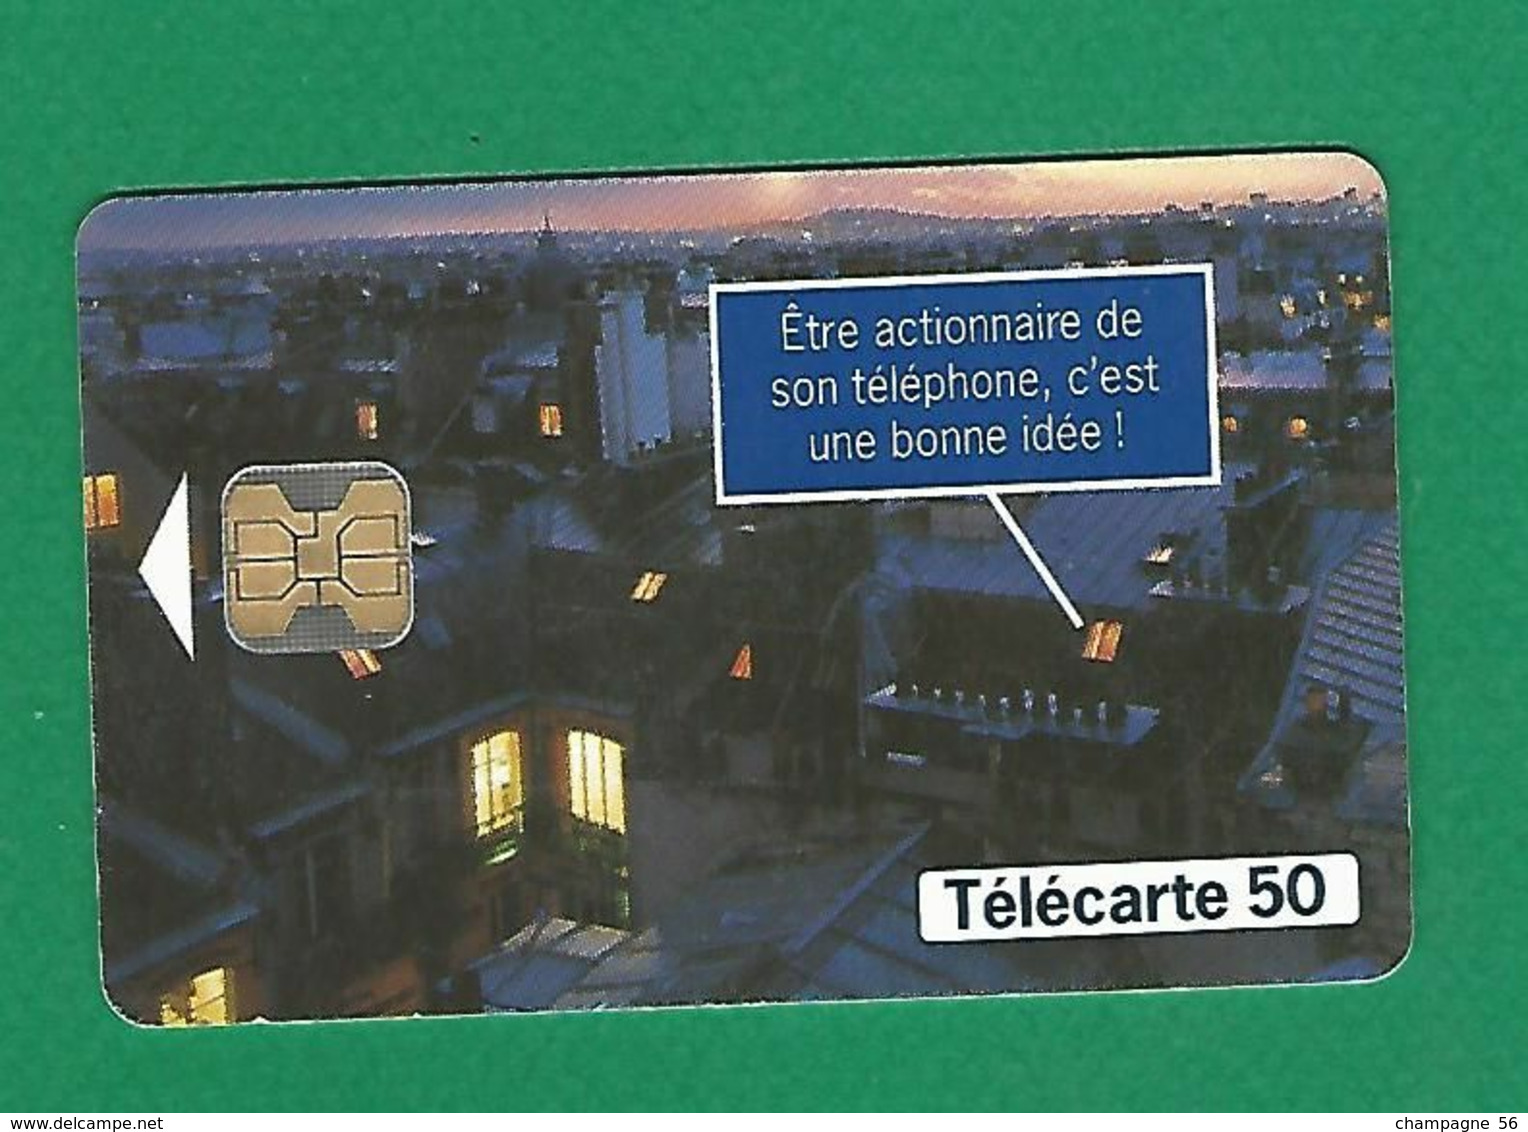 VARIÉTÉS FRANCE 97 F784E 50 / 05/97  OB2  TOITS CAPITAL FRANCE TELECOM  50 UNITES UTILISÉE - Errors And Oddities